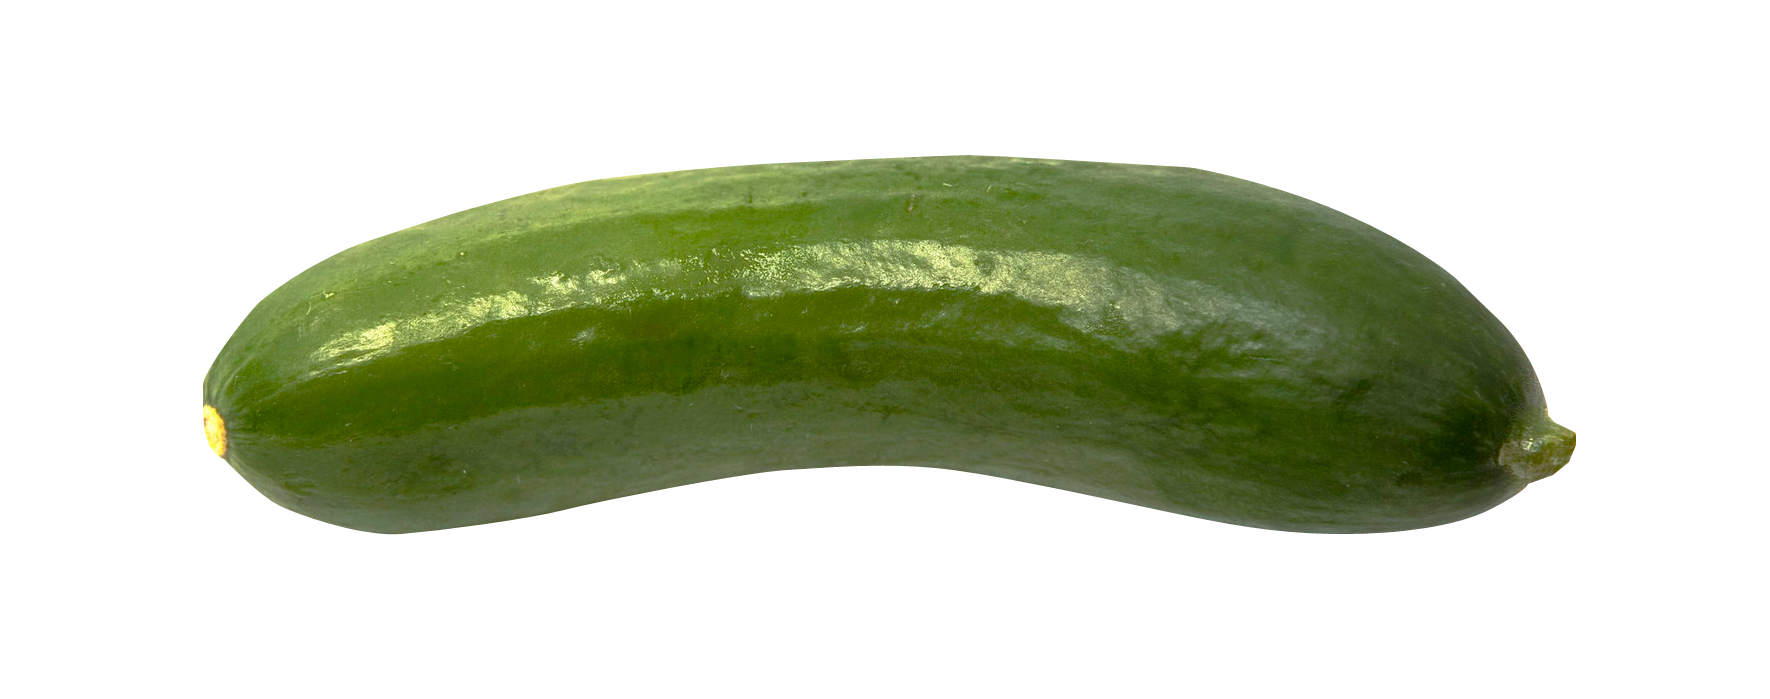 Cucumber PNG Images pngteam.com